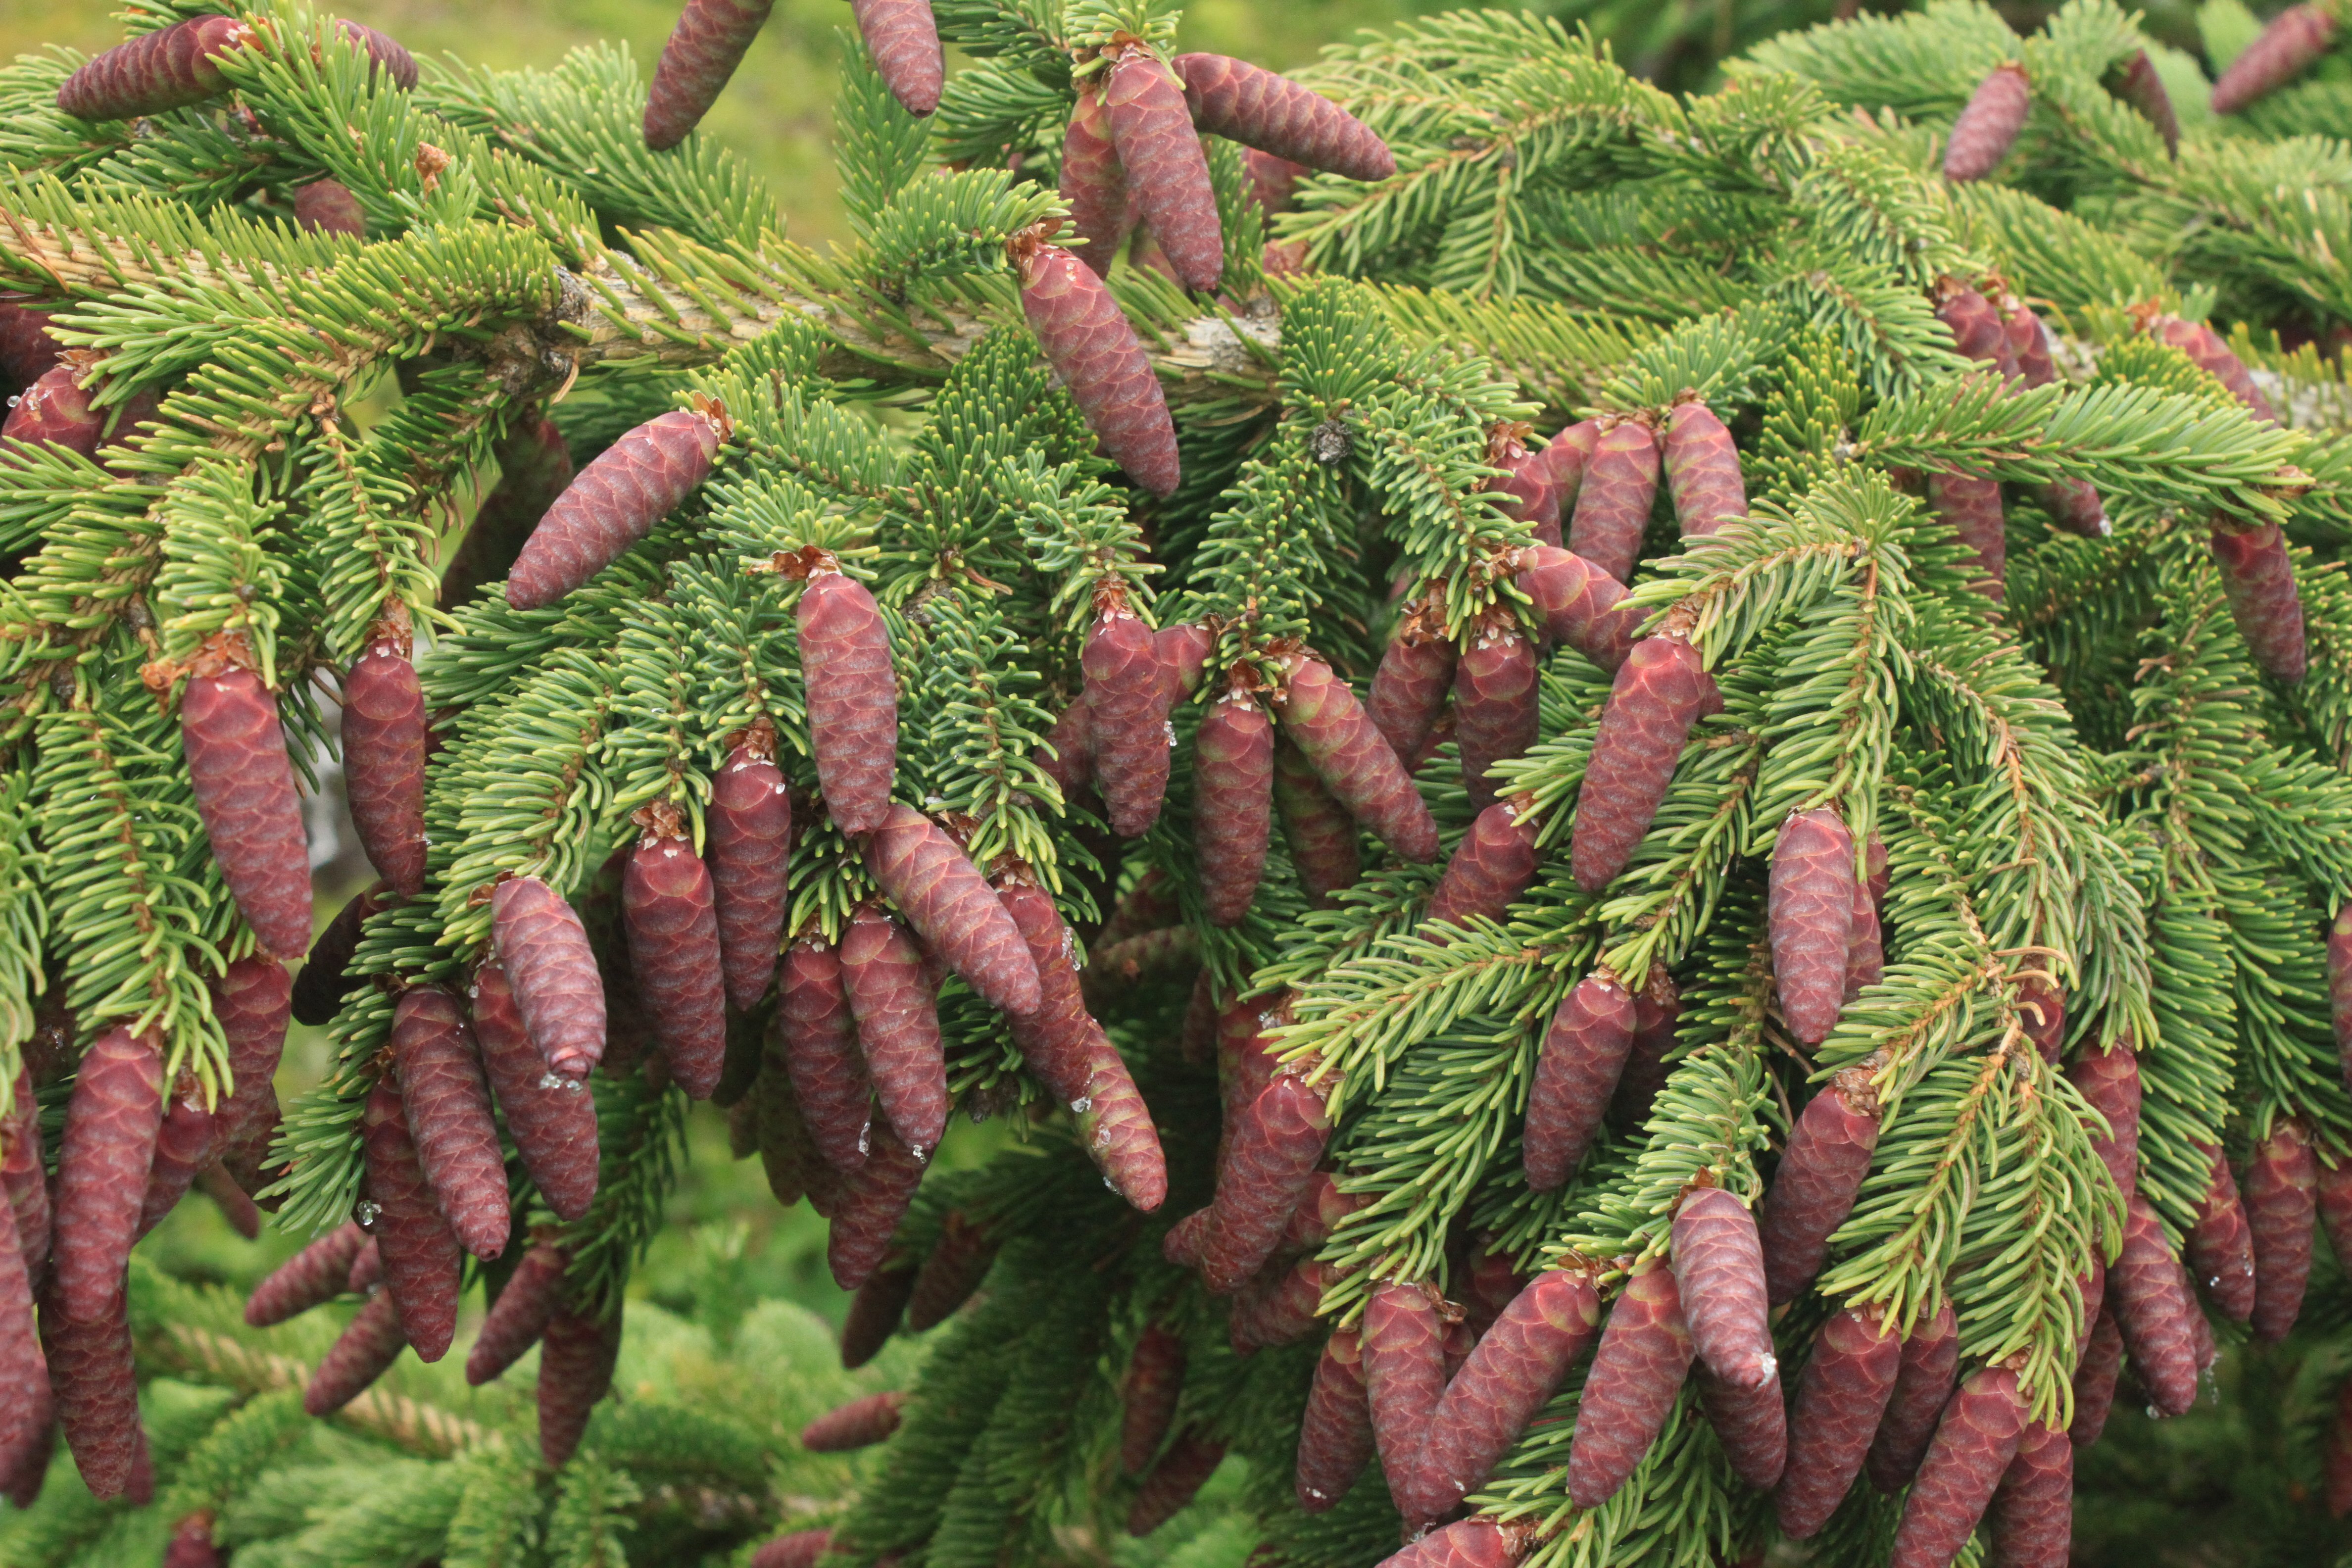 File:Conifer cone cluster.JPG - Wikimedia Commons